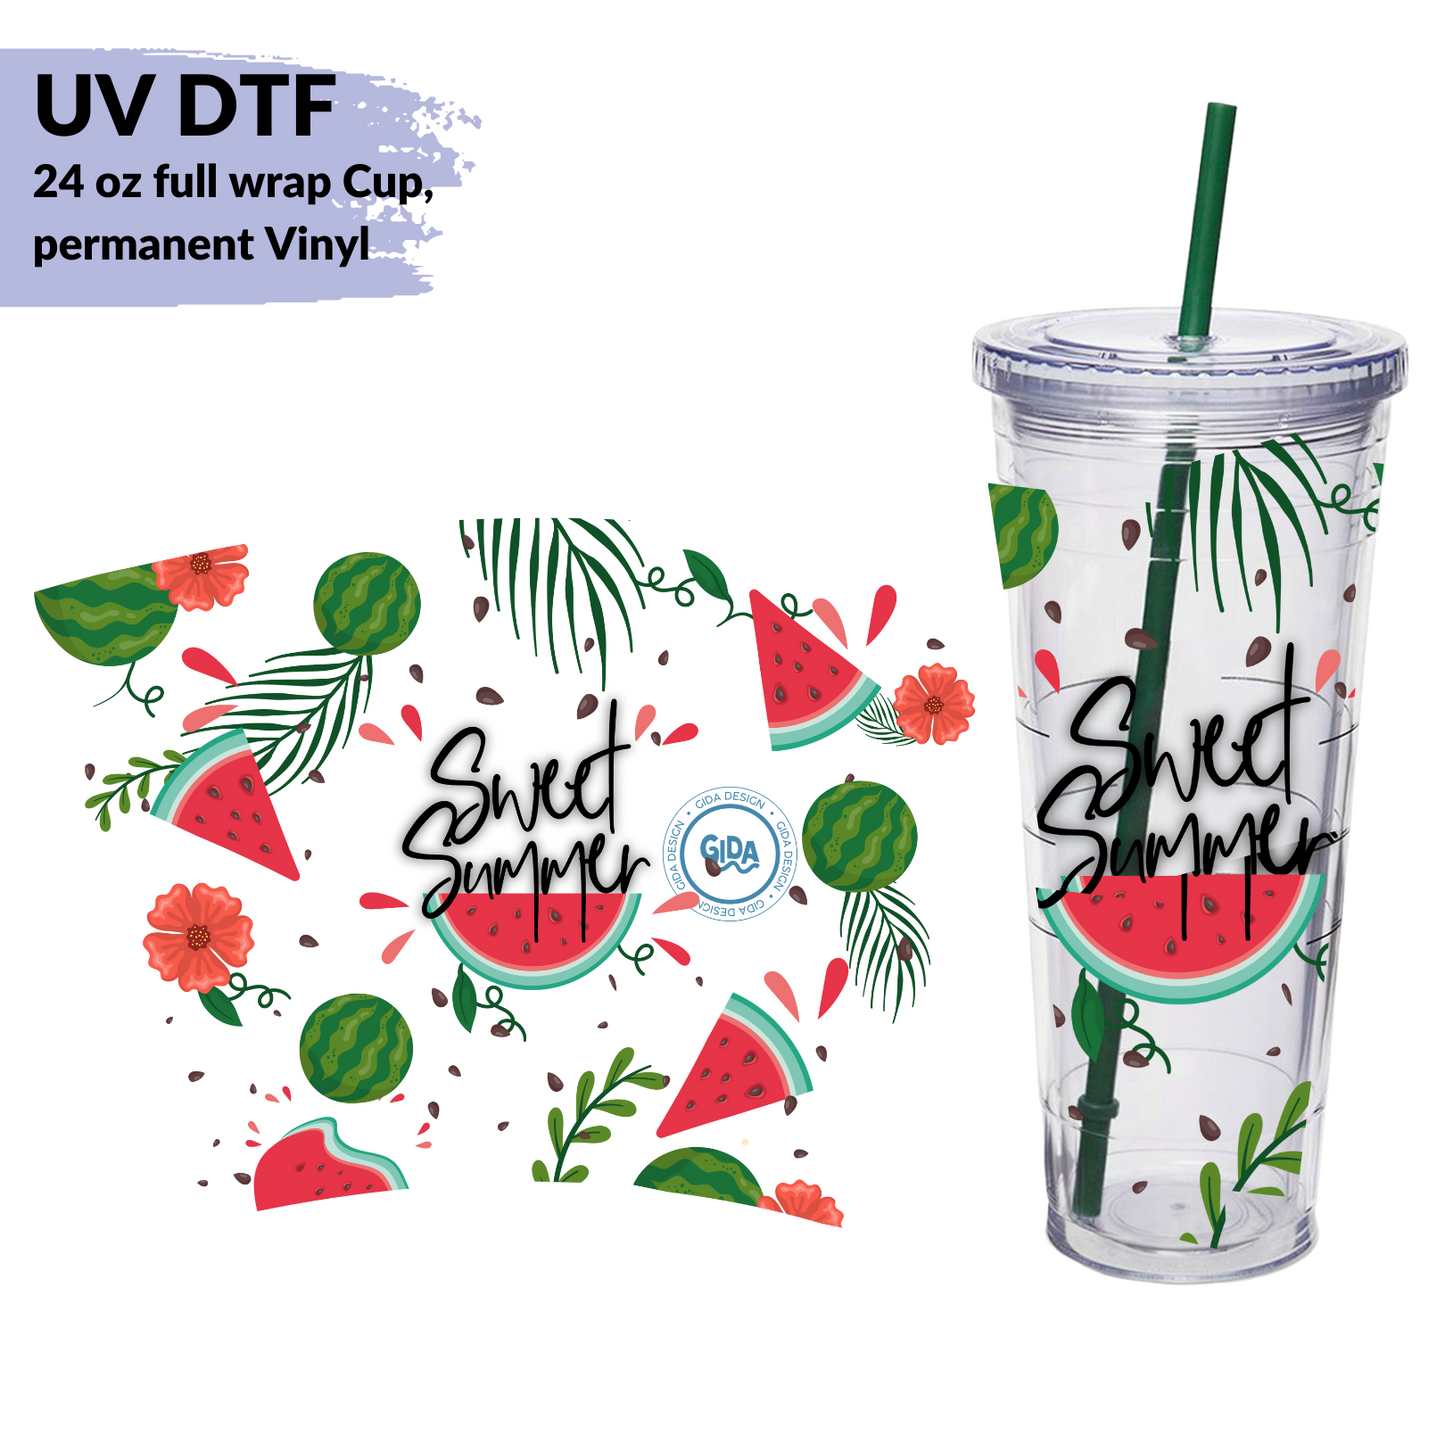 UV DTF - Sweet Summer 24 oz